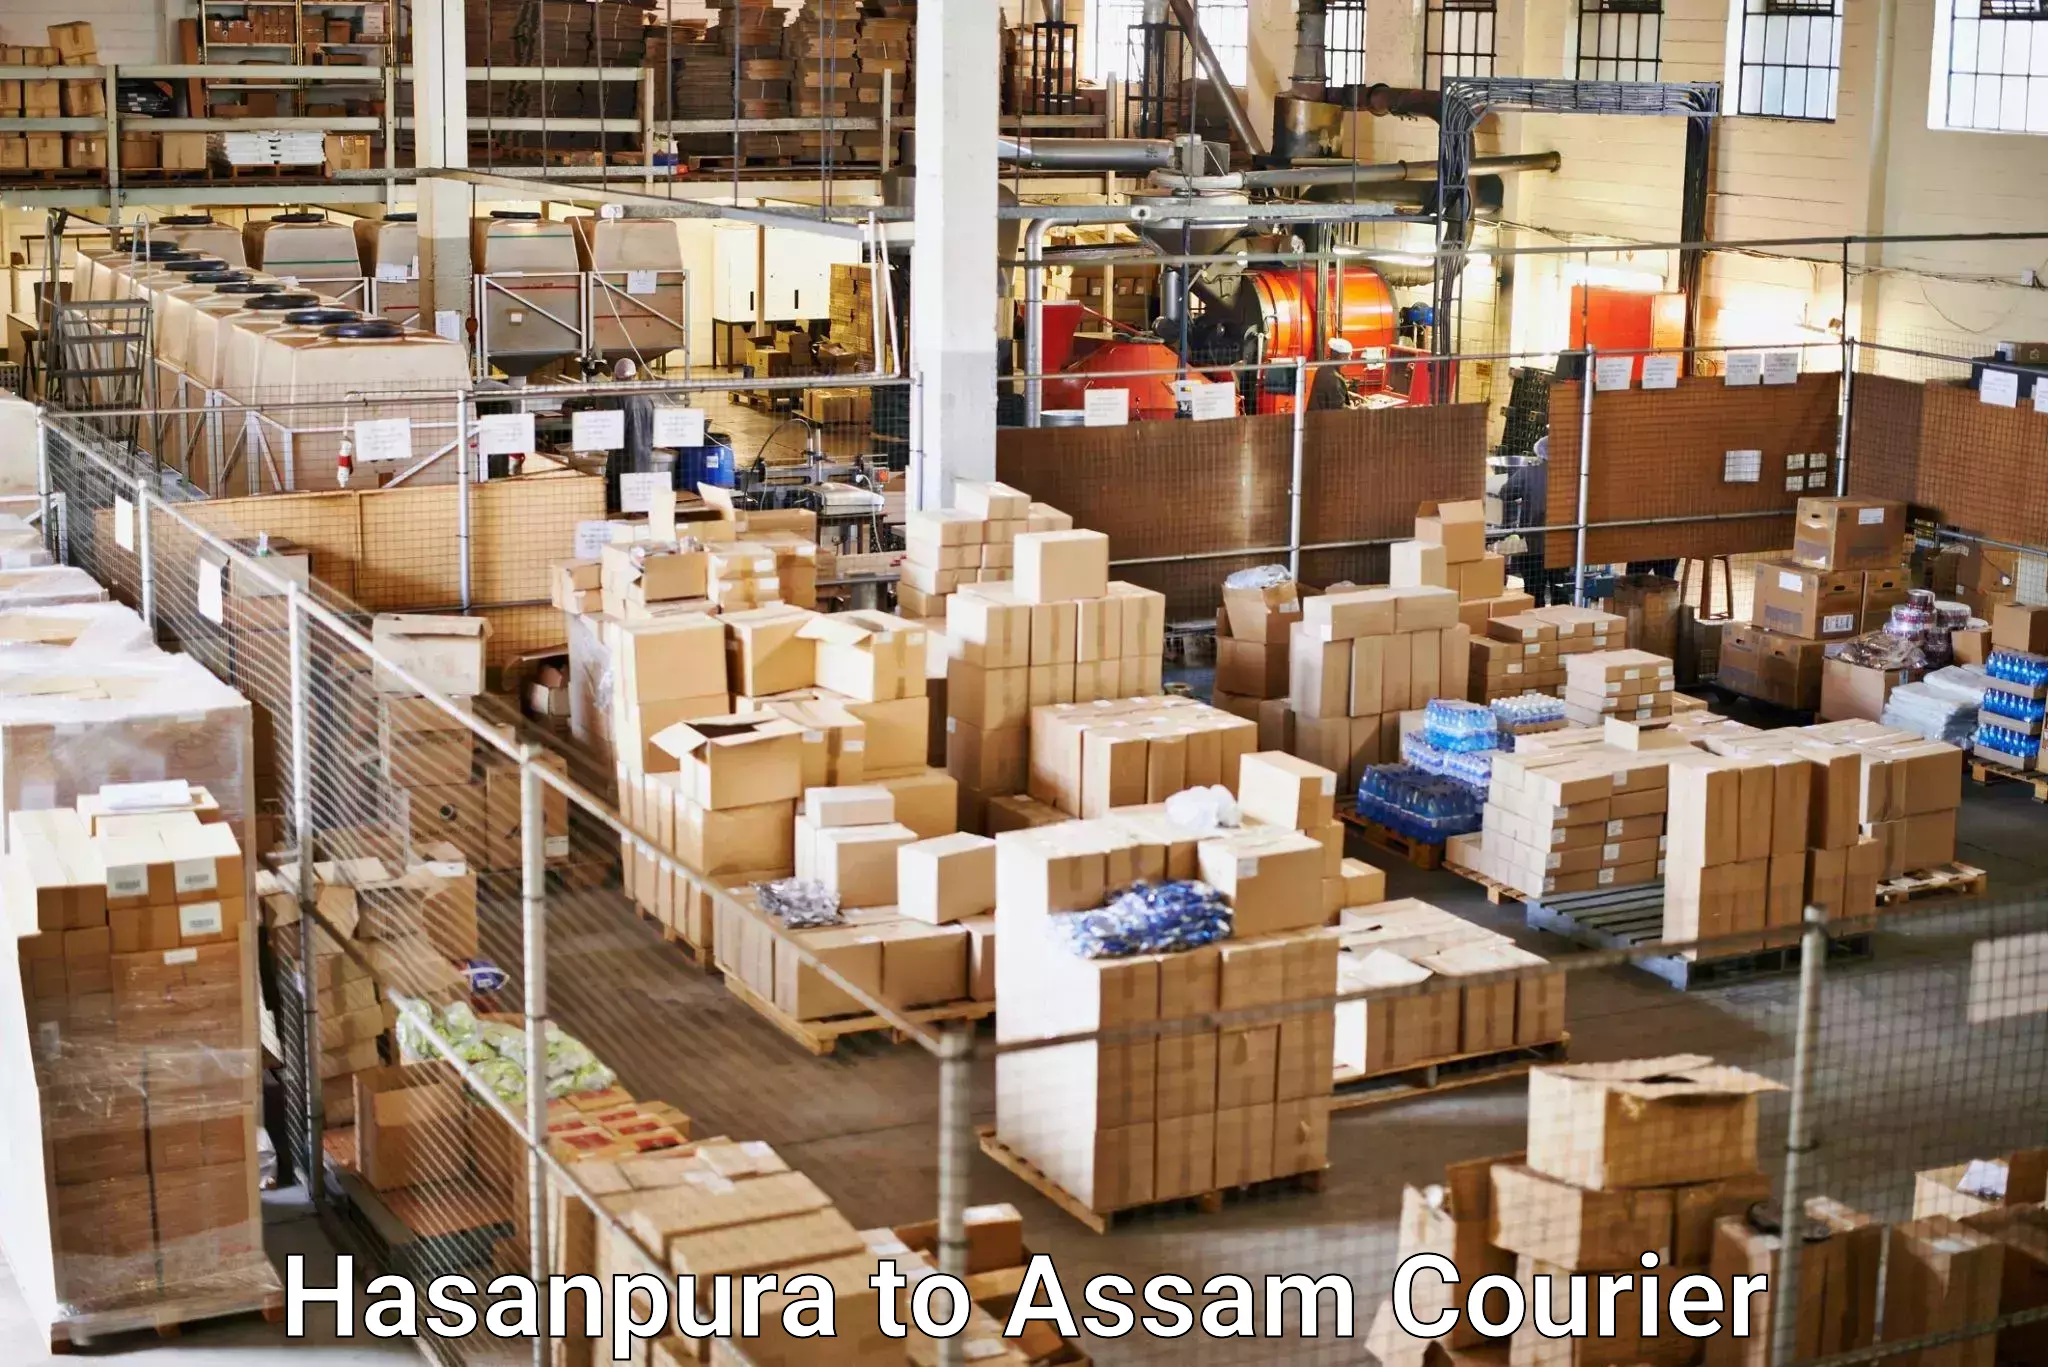 Courier service partnerships Hasanpura to Badarpur Karimganj